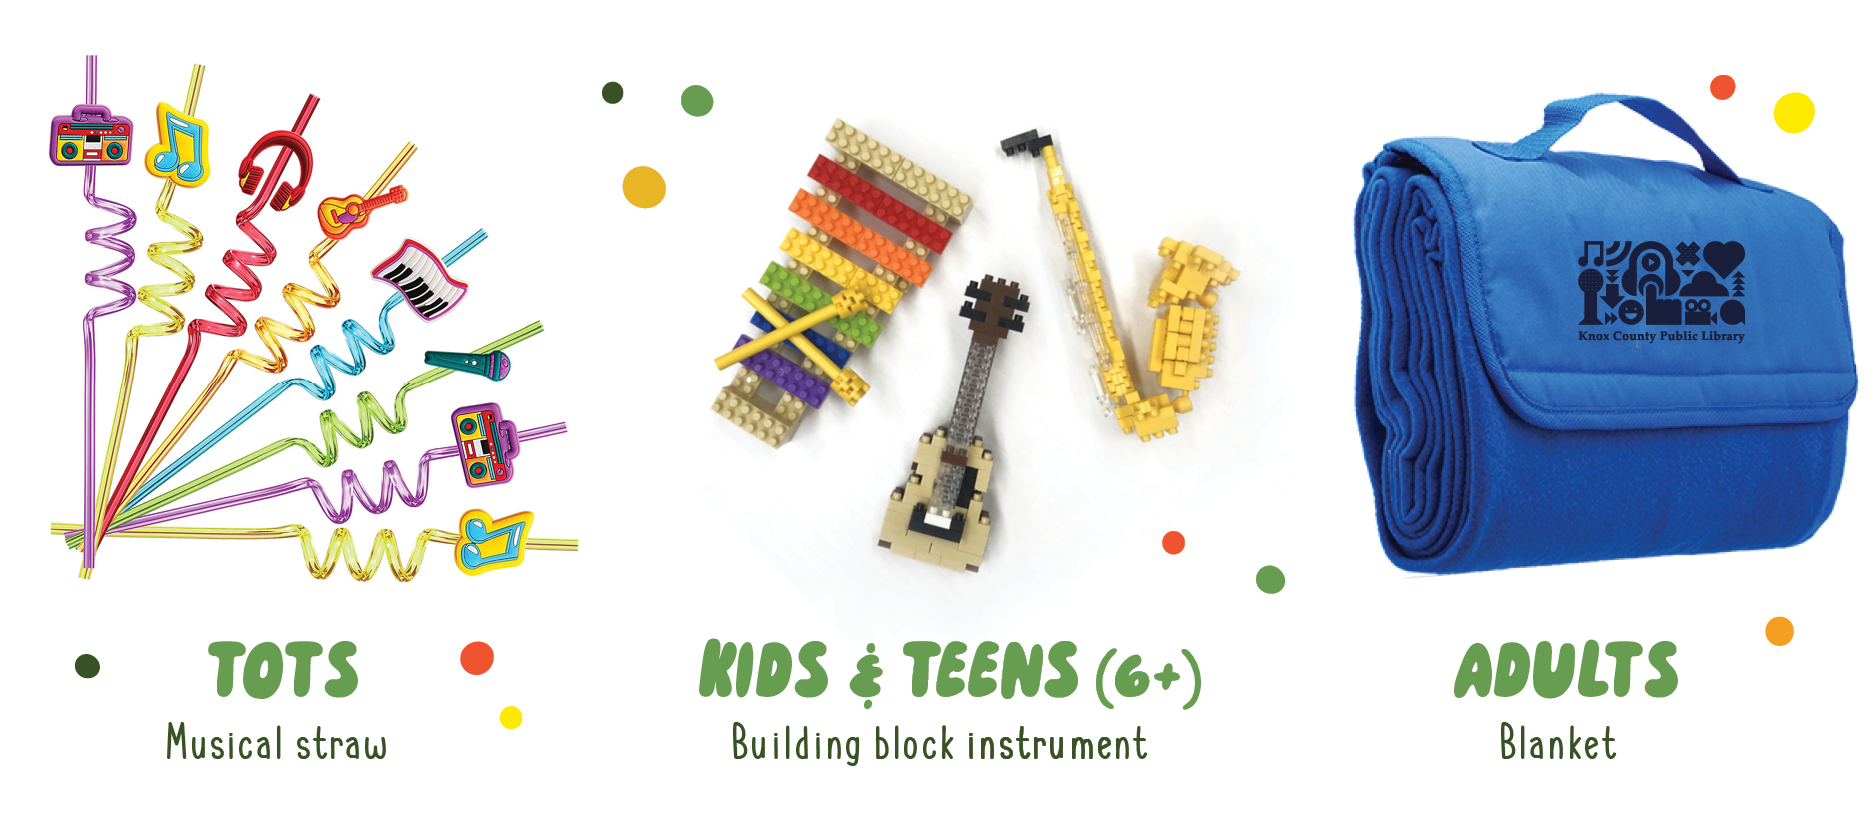 photos of colorful twisty straw (Tots); building block instruments (Kids & Teens 6+); folded fleece blanket (Adults)